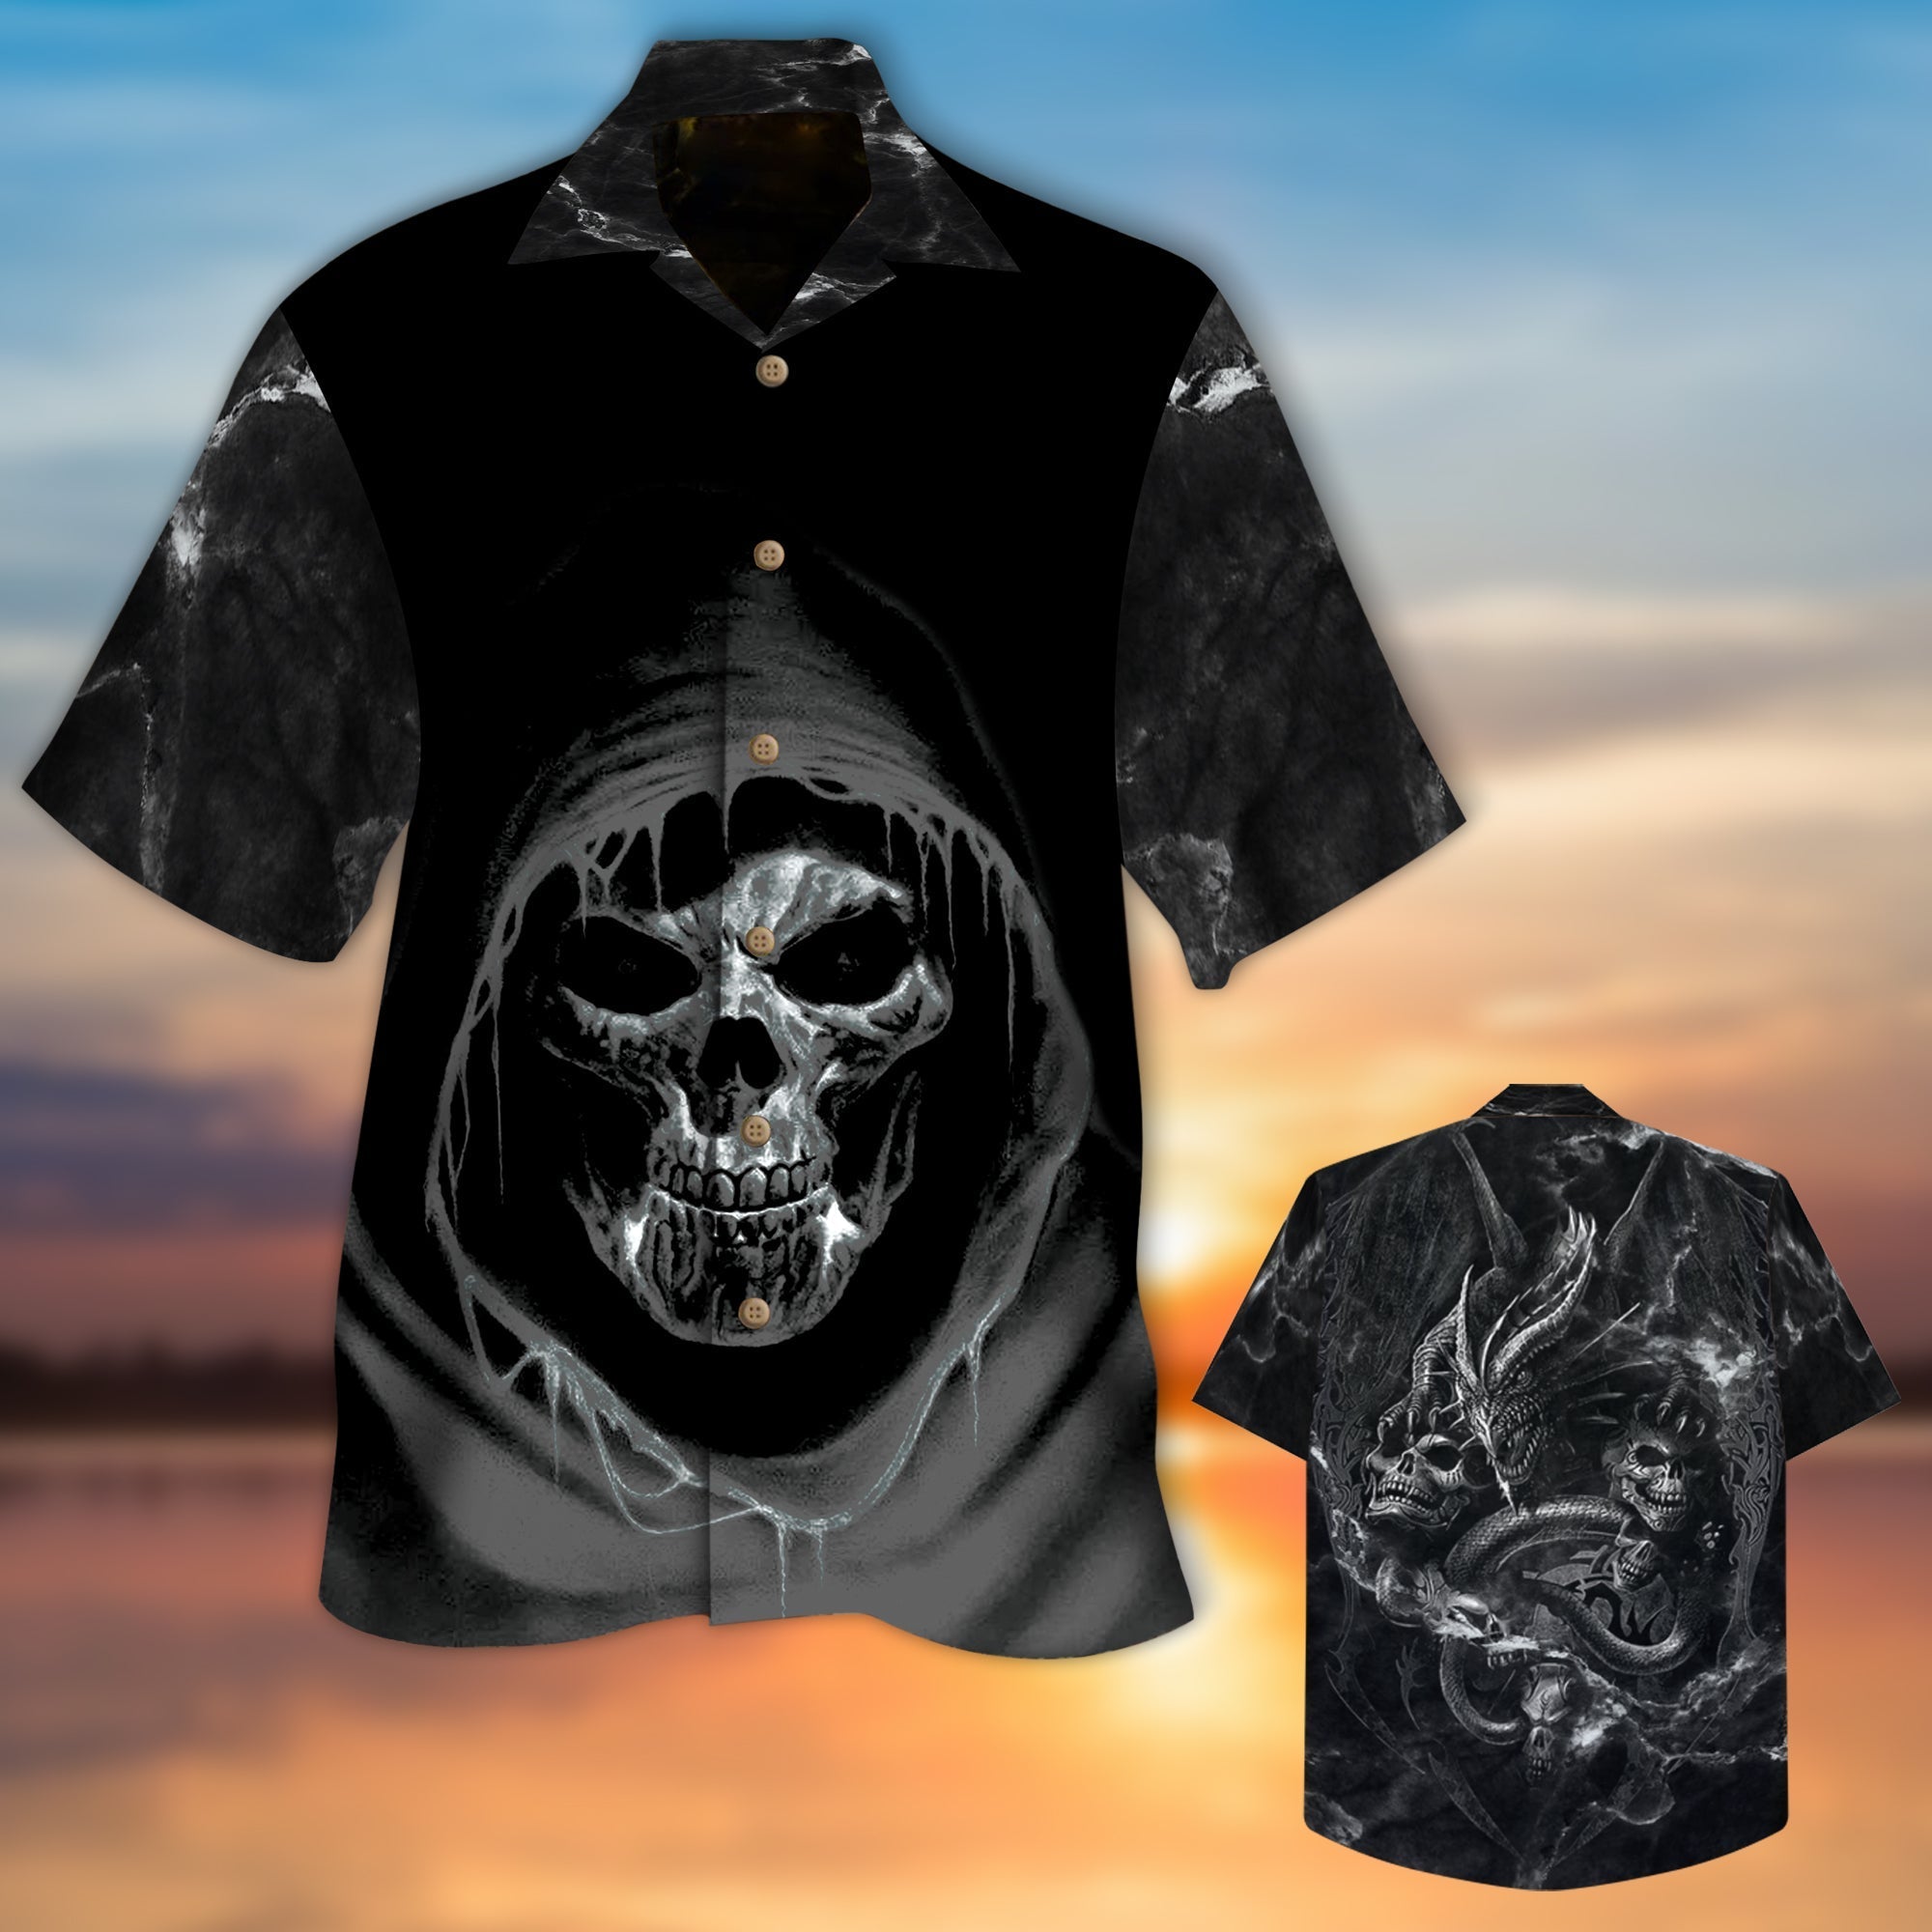 The Reaper Skull Black All Over Printed 3D Hawaiian Shirt